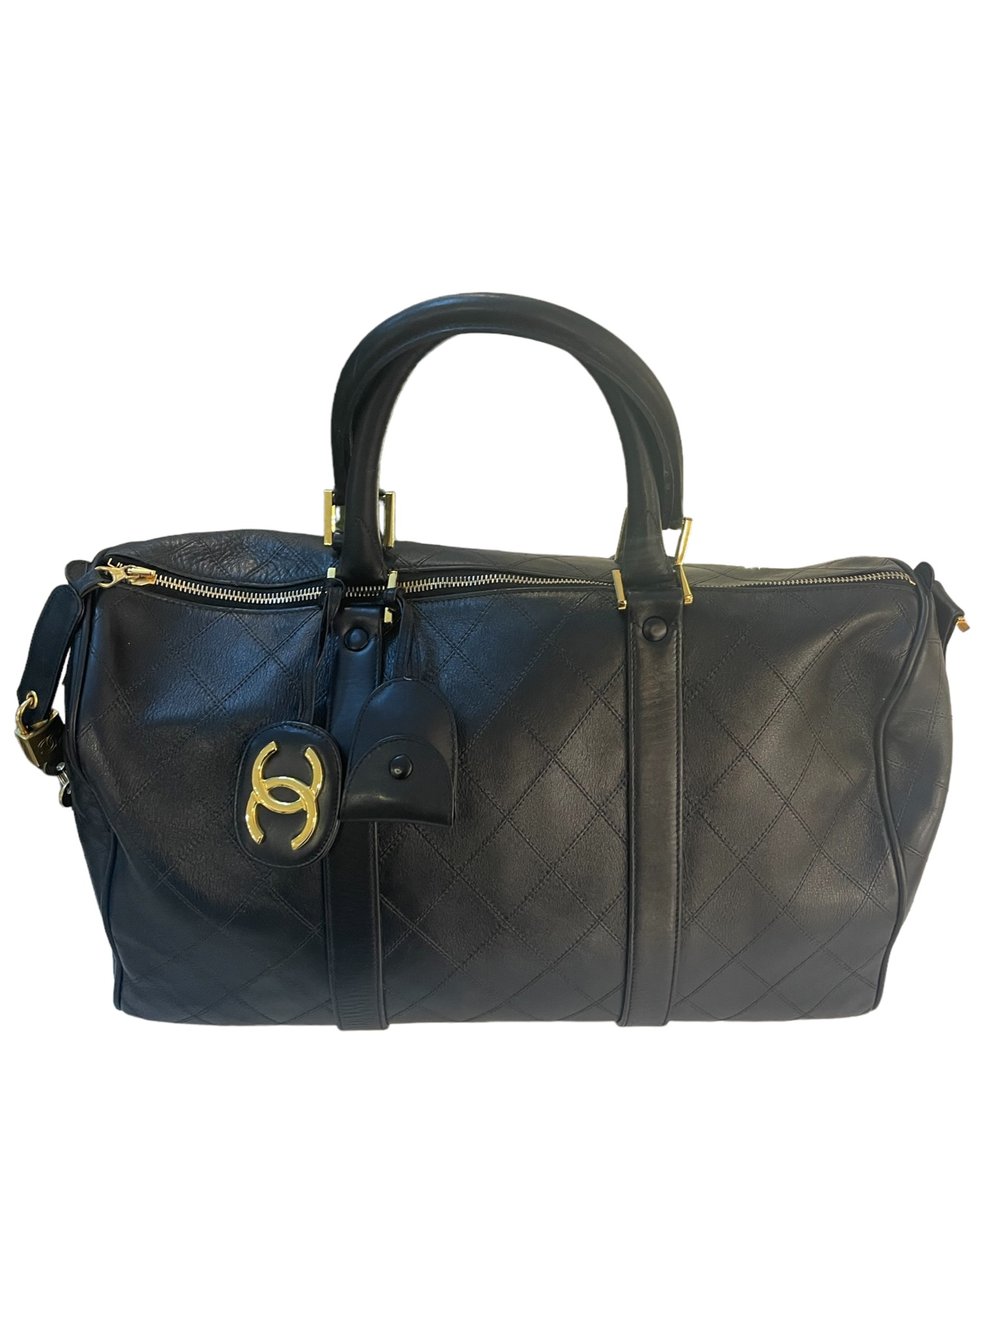 Chanel Duffle Bag 